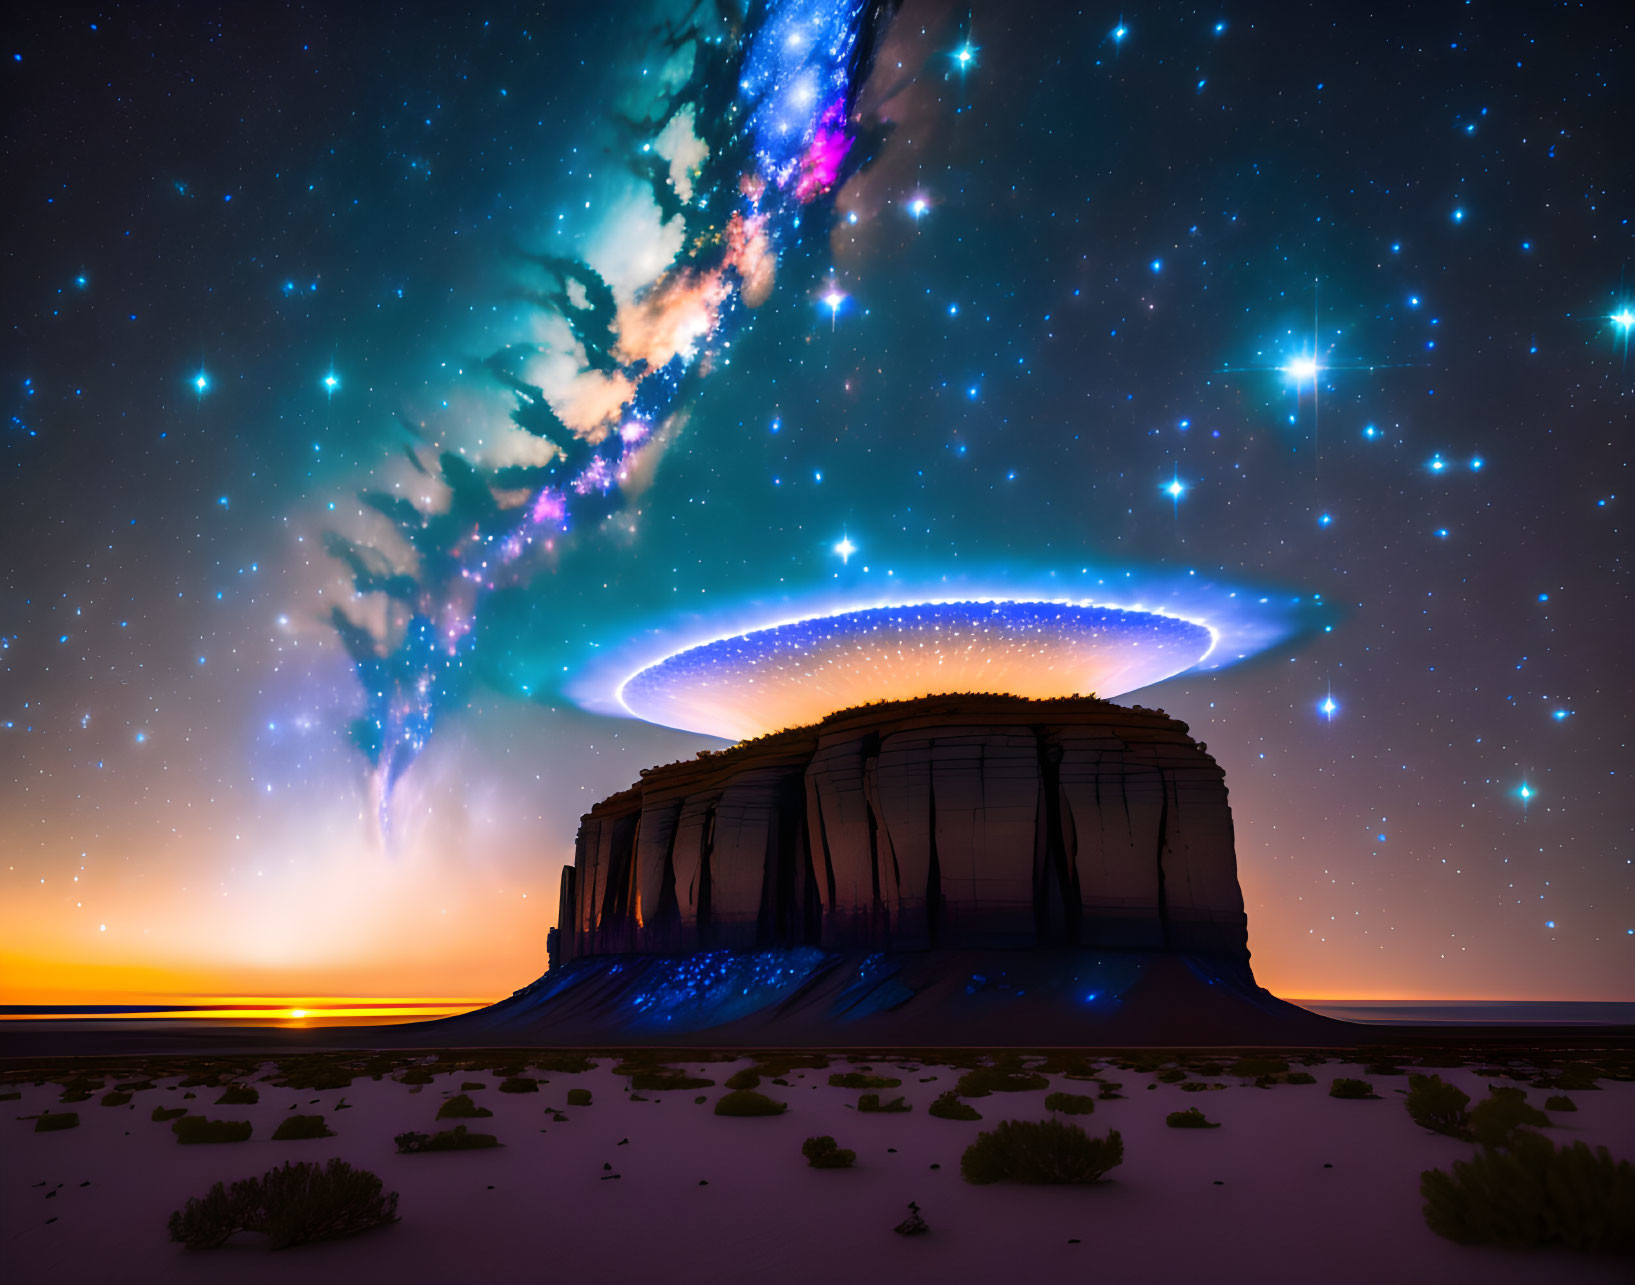 Starry desert night: Glowing UFO over mesa & Milky Way